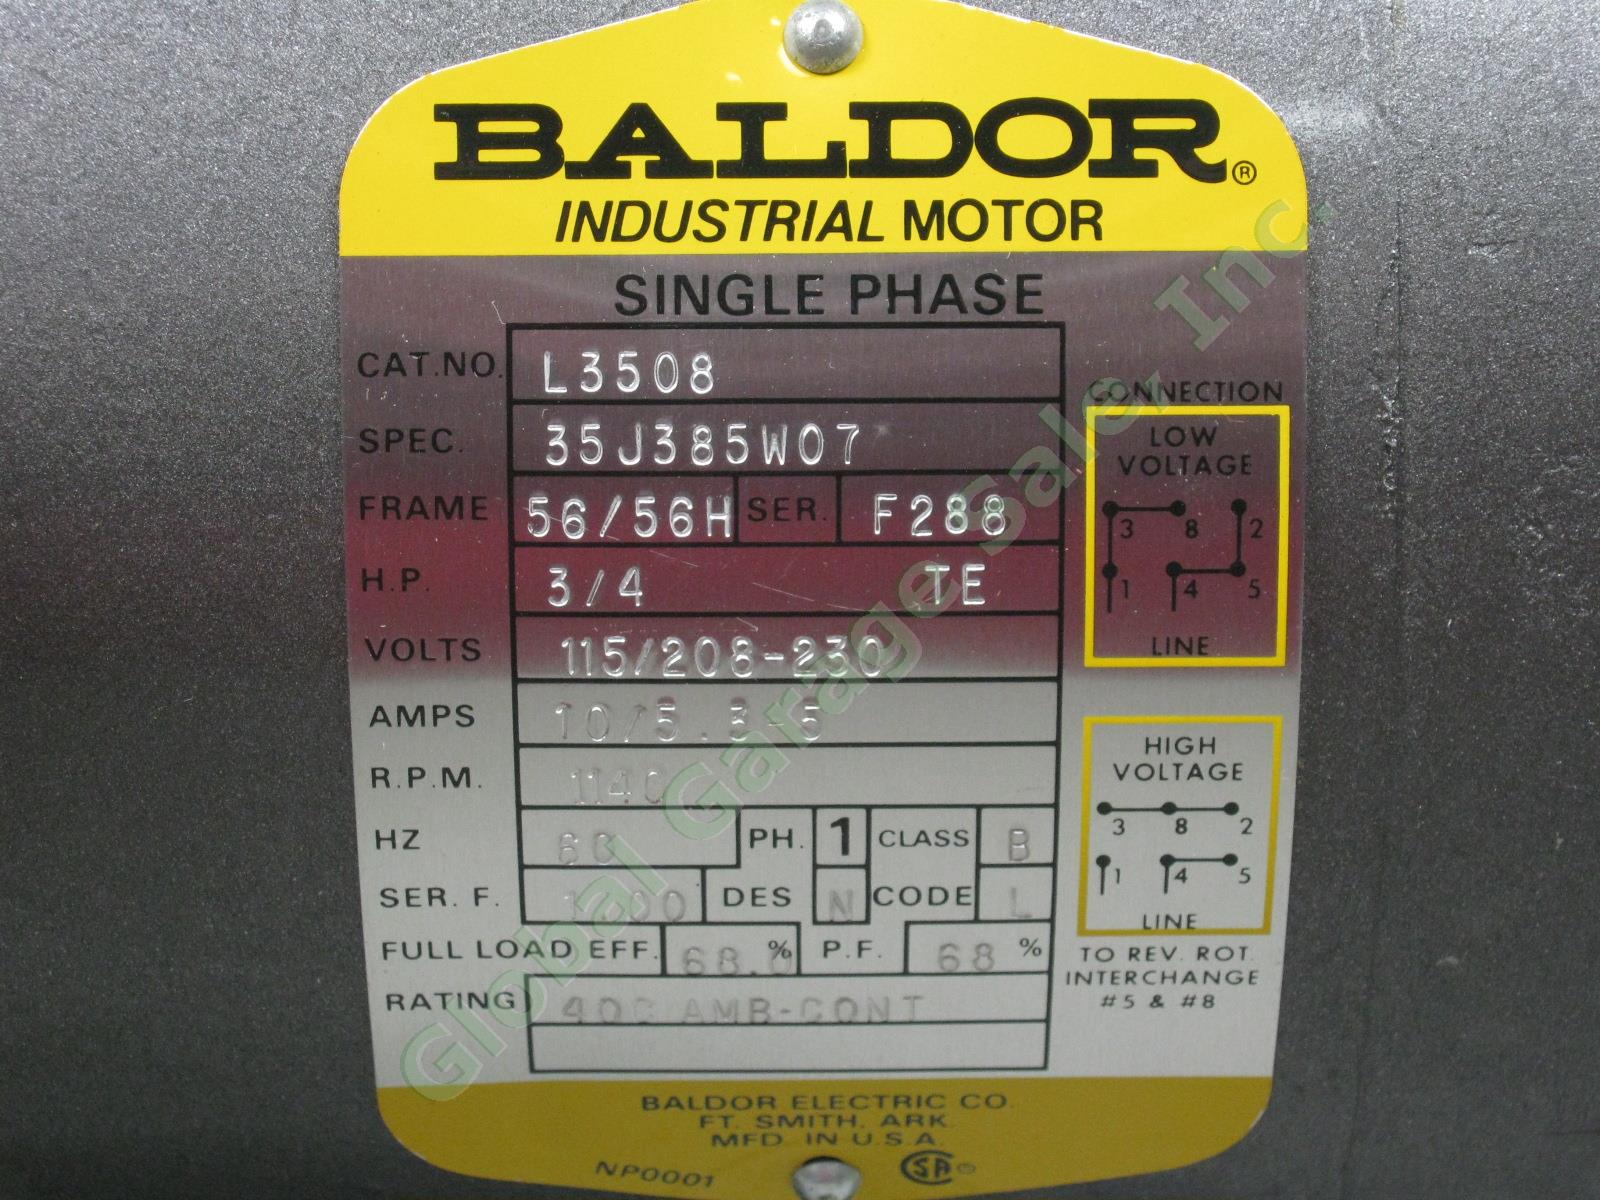 Baldor L3508 3/4HP 1140RPM 56/56H F288 115/208-230V 10/5.3-5A 60Hz 1-Phase Motor 1